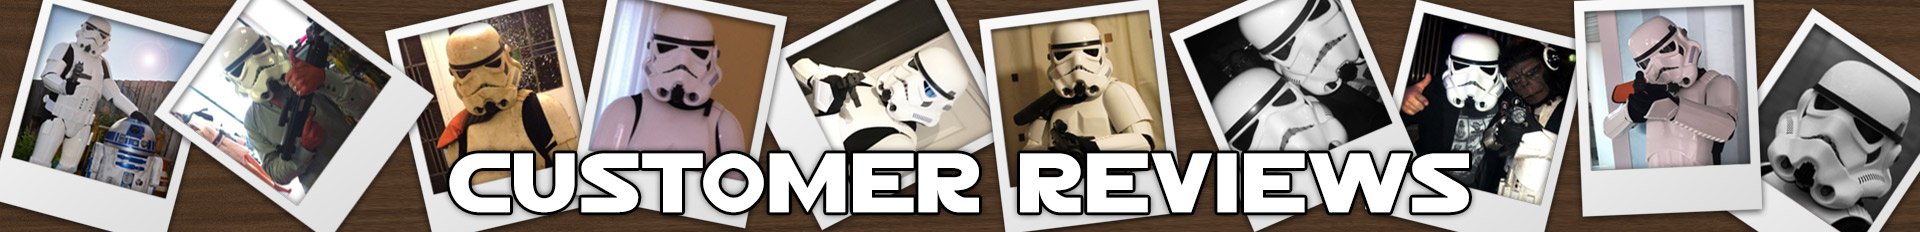 Stormtrooper Costume Reviews